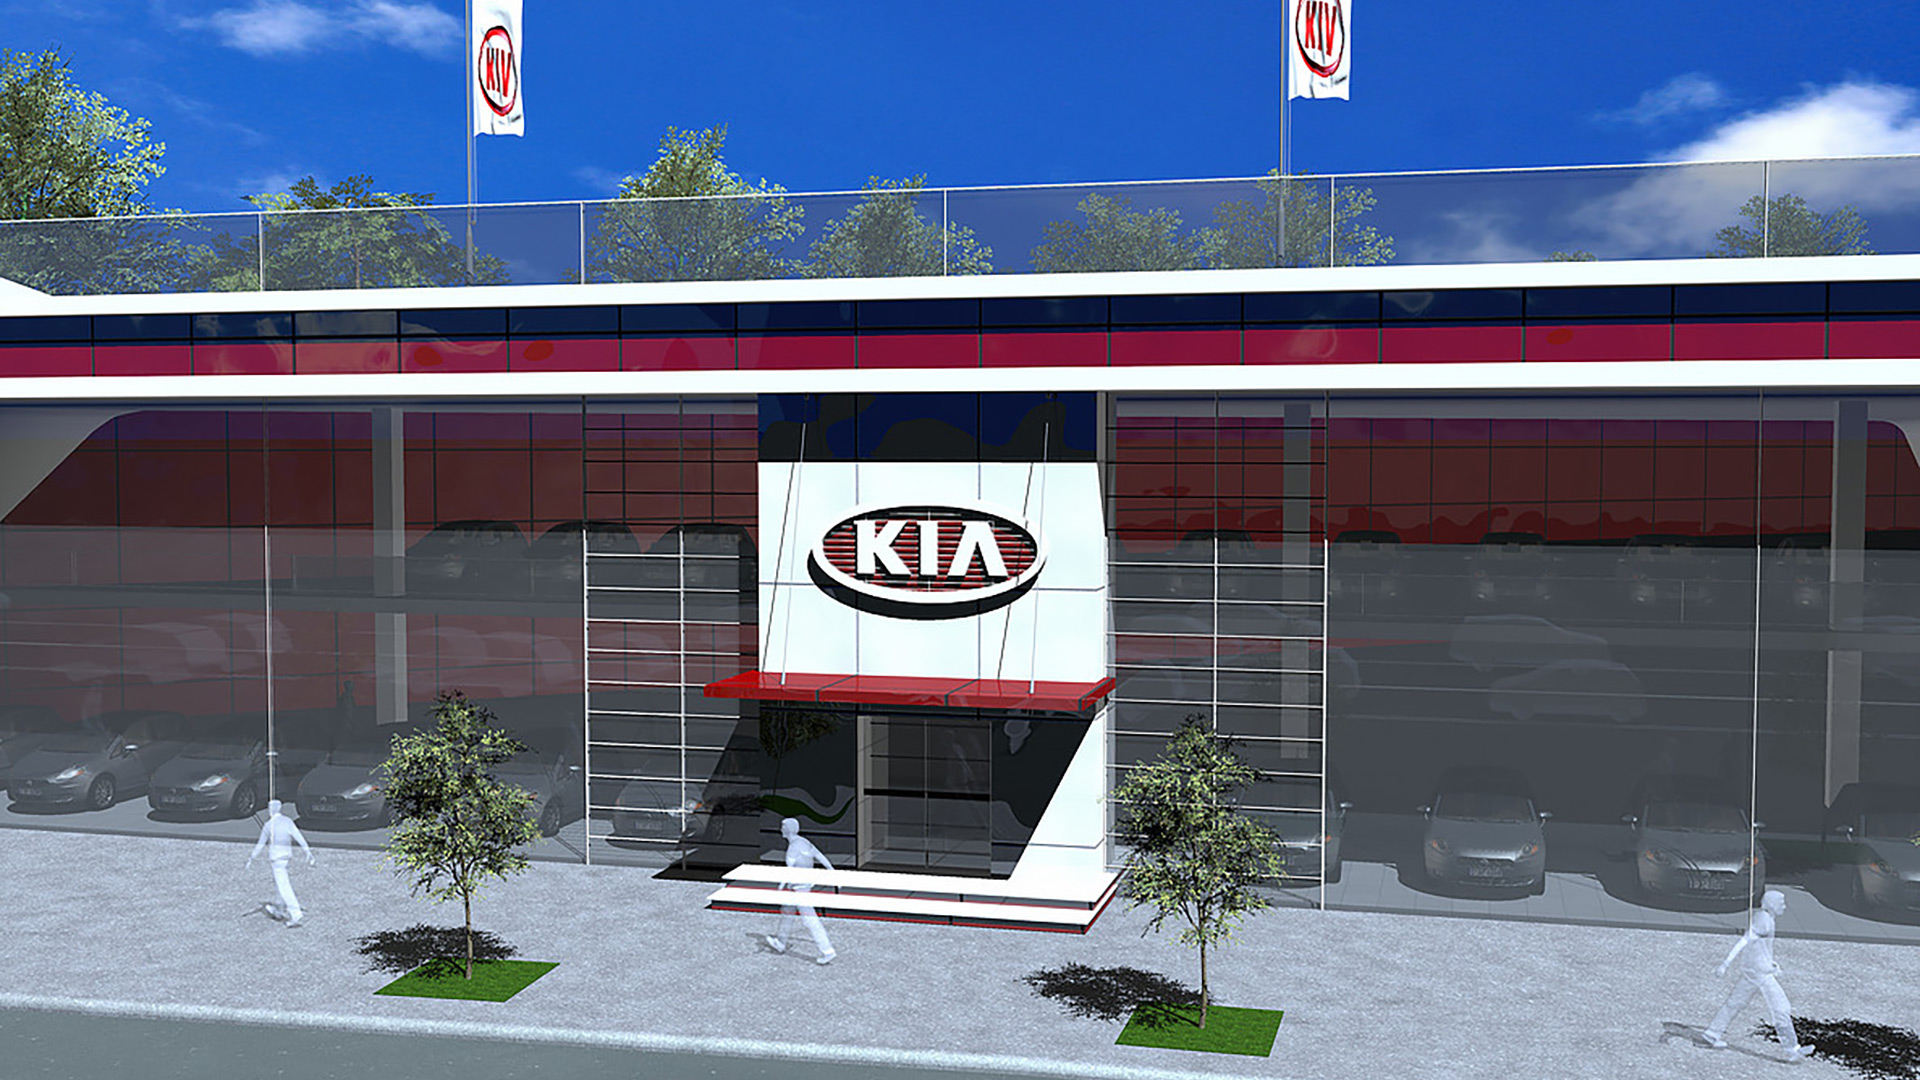 Kia Dealership | GERALD J. CALIENDO RA PC